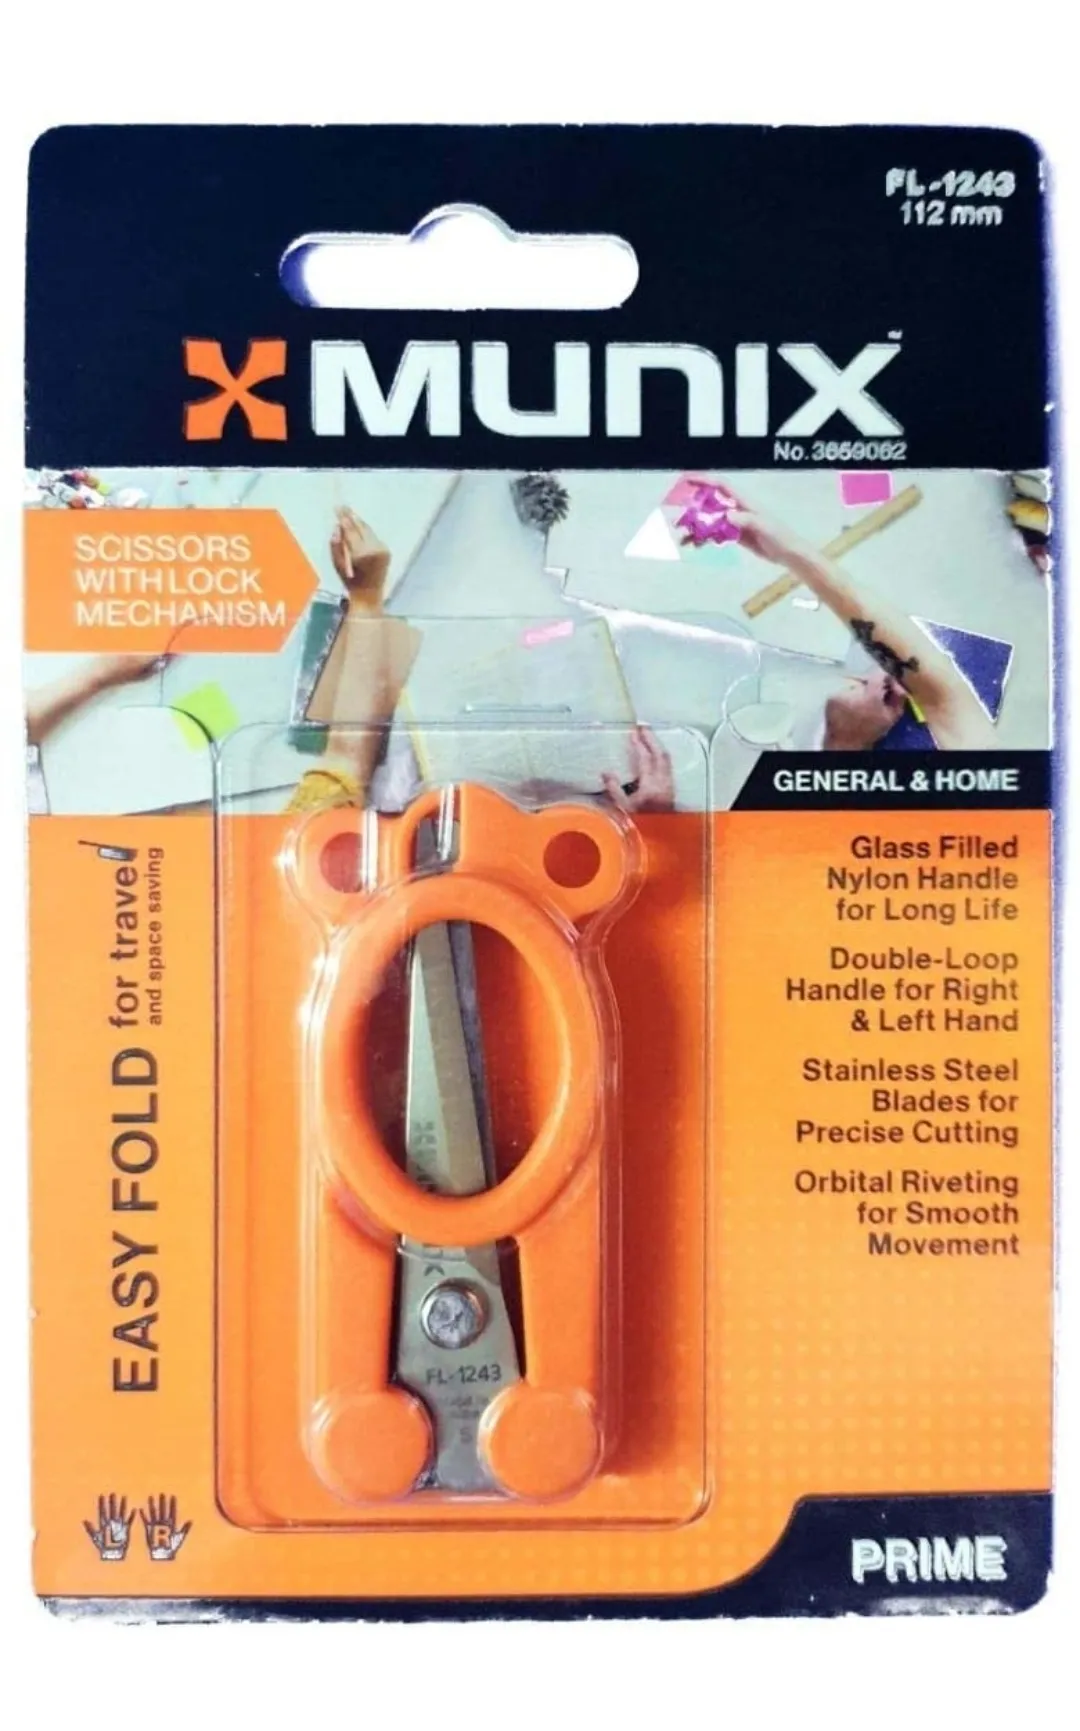 Kangaro Munix Scissors FL-1243 , 112 mm, Folding Scissors, General & Home Pack of 1